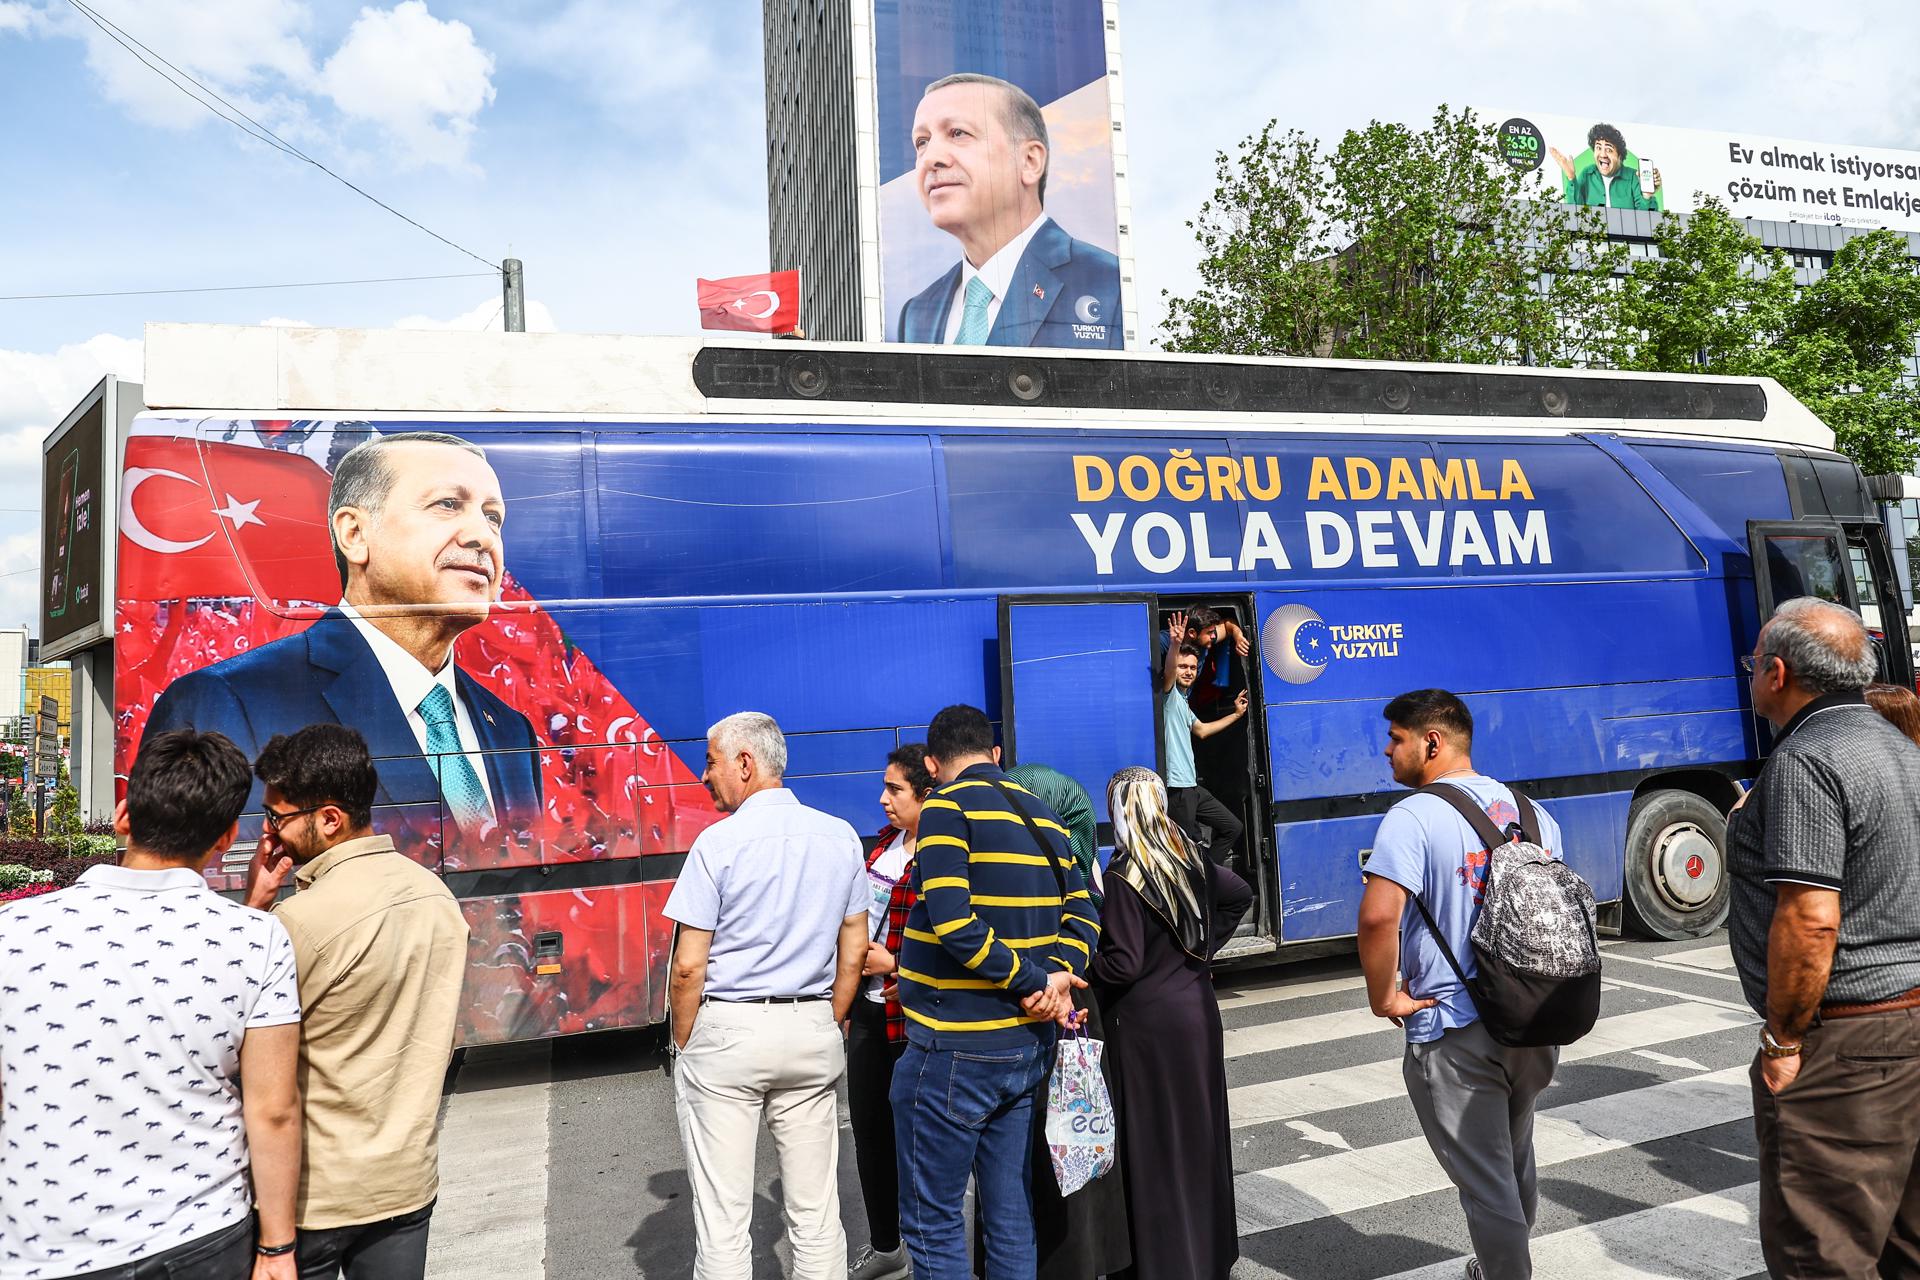 Turkish President Recep Tayyip Erdogan's election campaign bus passes in front of his poster in Ankara, Turkey, 27 May 2023. EFE/EPA/SEDAT SUNA
